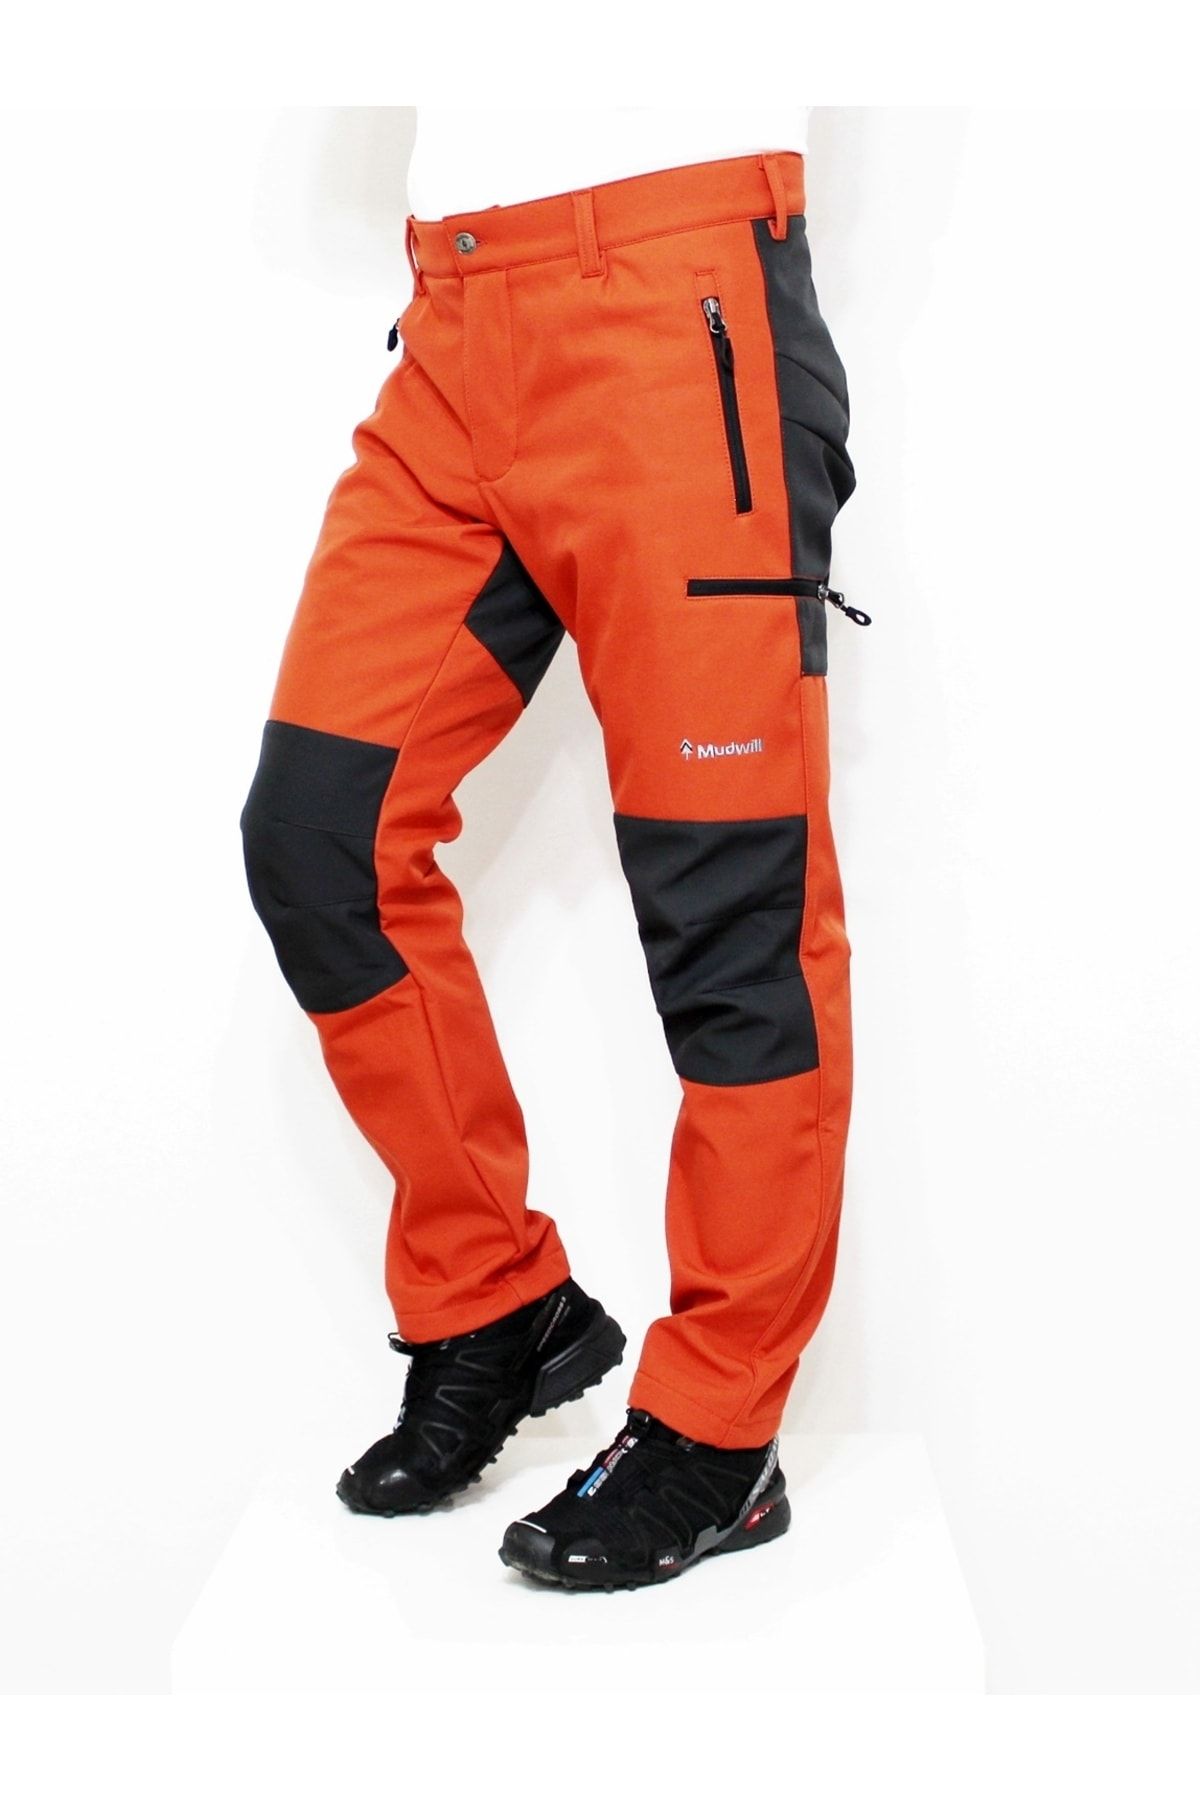 Mudwill Turuncu-gri Hiker500 Kışlık Softshell Pantolon